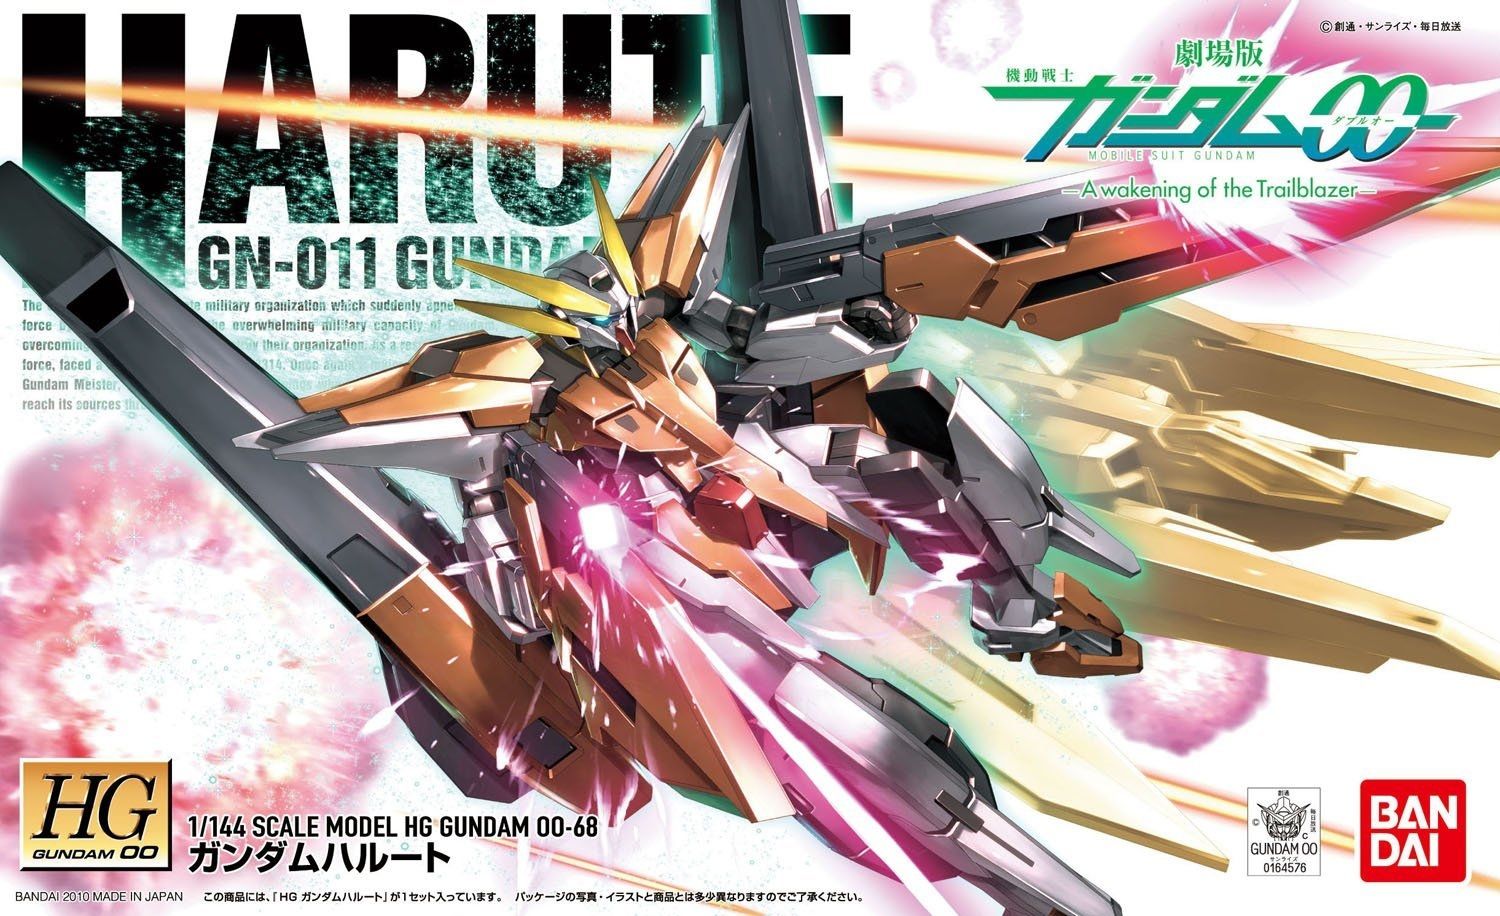 HG 1/144 Gundam Harute - High Grade Mobile Suit Gundam 00 The Movie -A wakening of the Trailblazer- | Glacier Hobbies